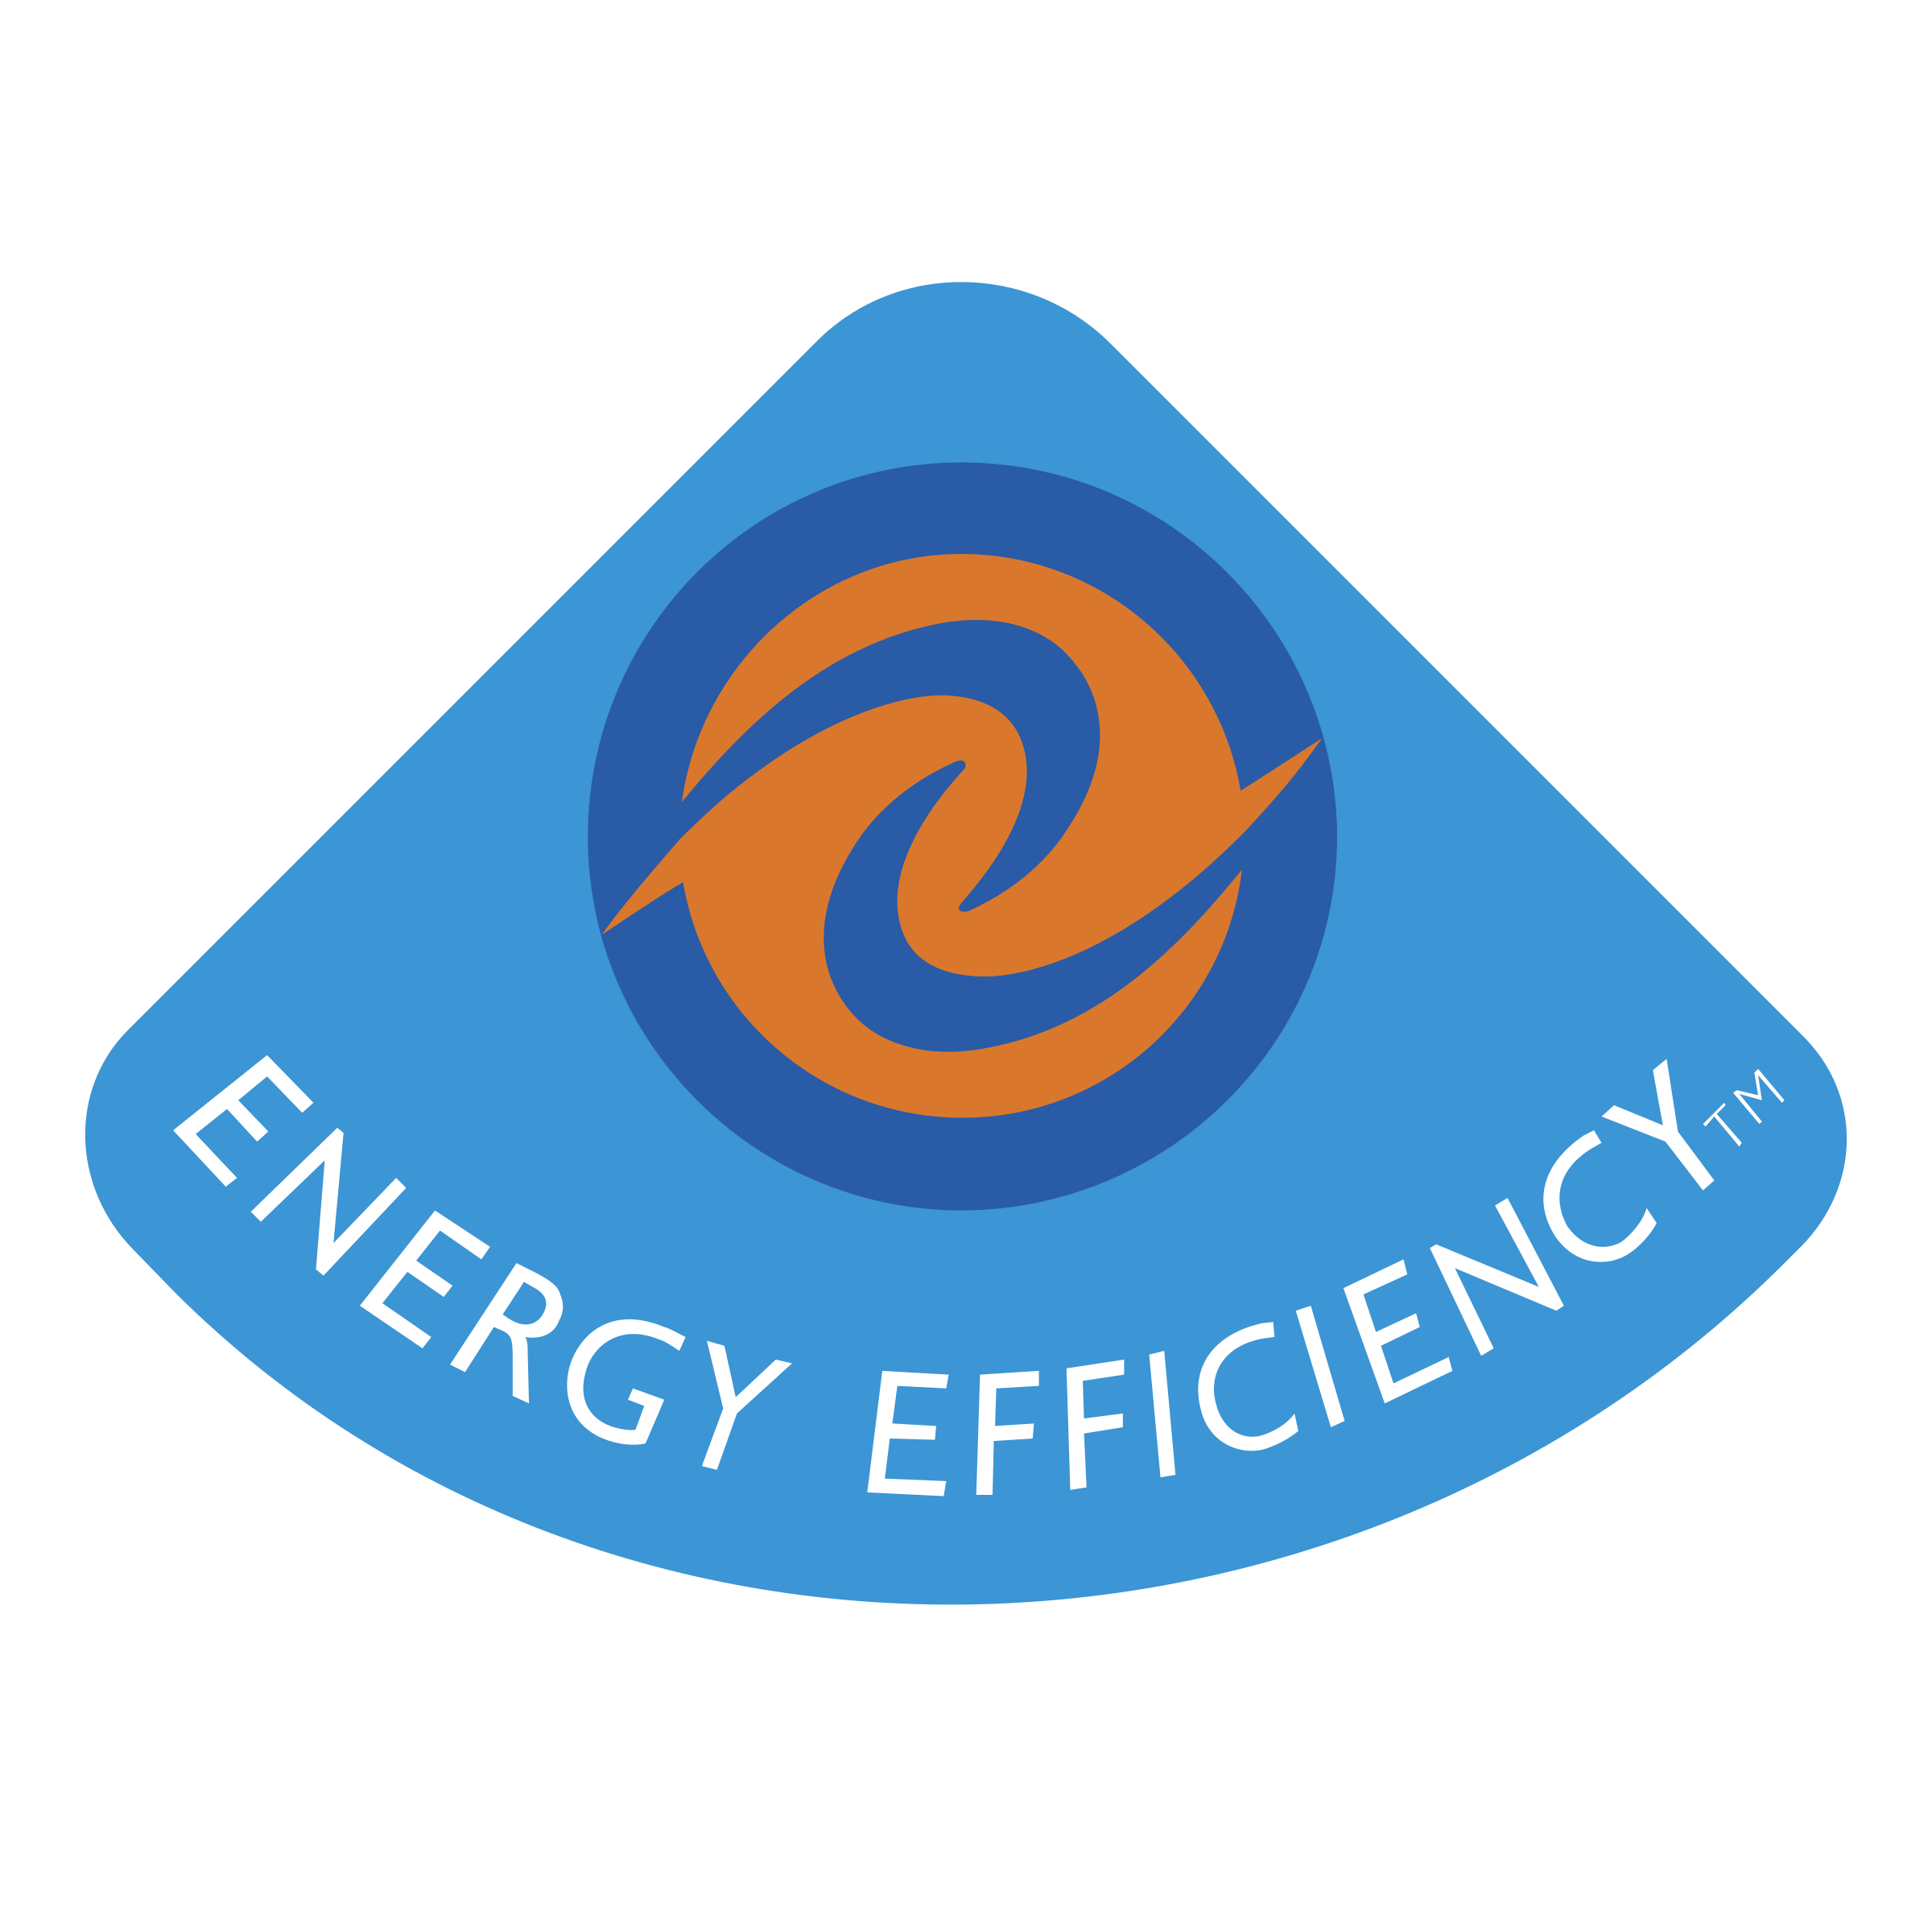 Efficiency Logo - Energy Efficiency Logo PNG Transparent & SVG Vector - Freebie Supply